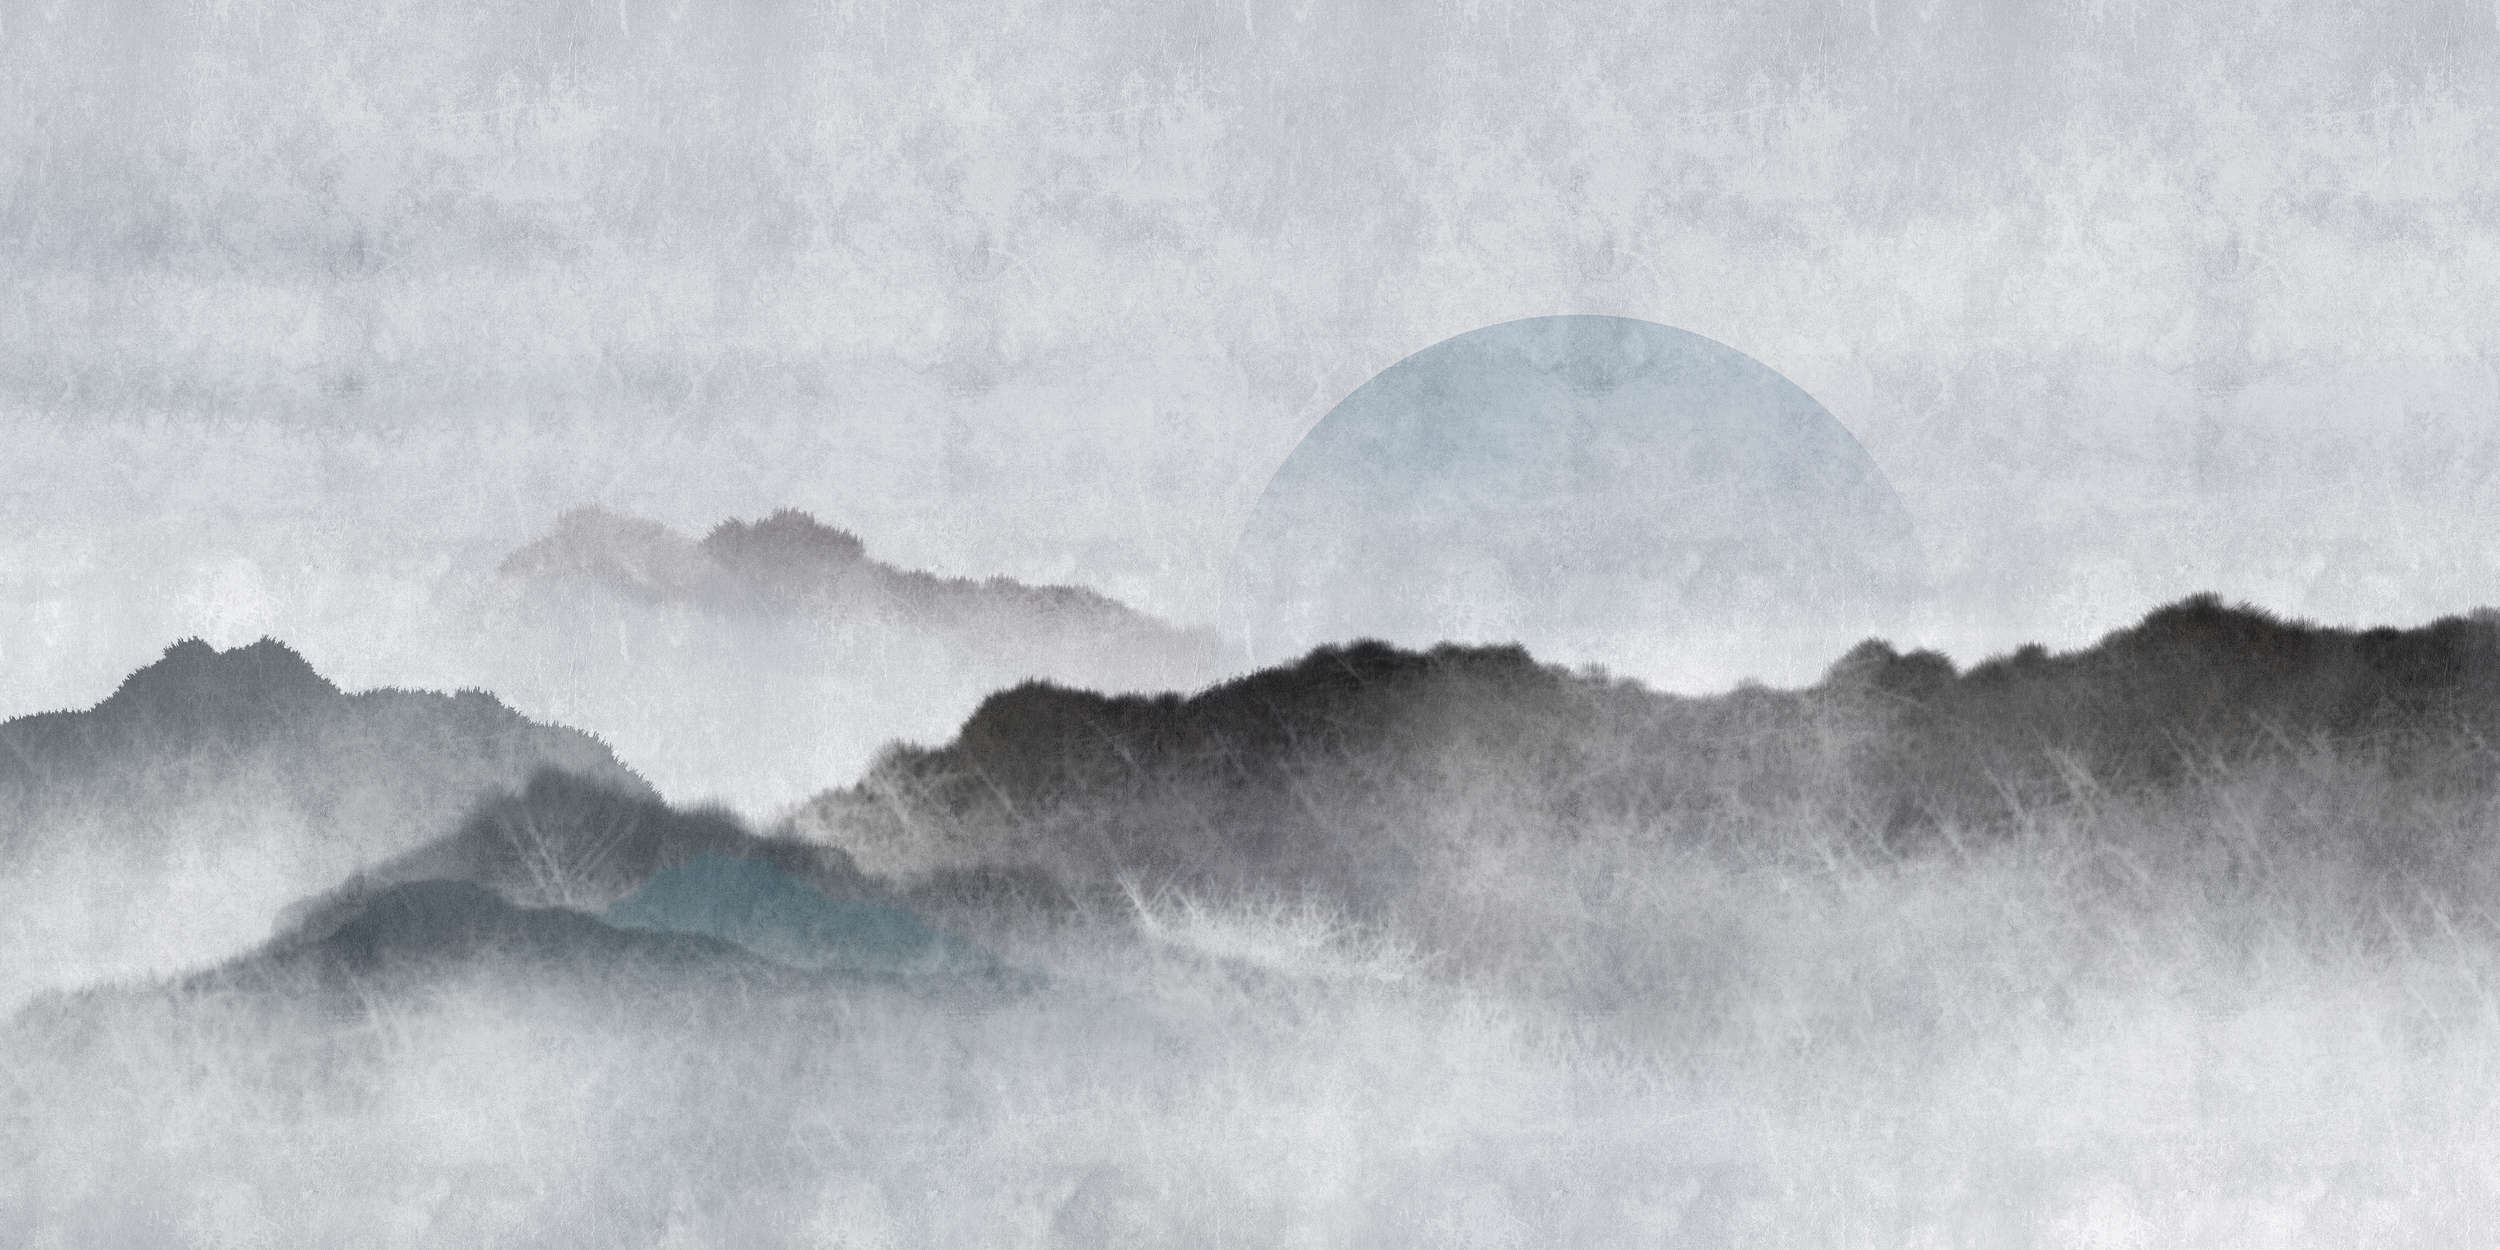             Akaishi 2 - Photo wallpaper Asian art mountain landscape, grey & white
        